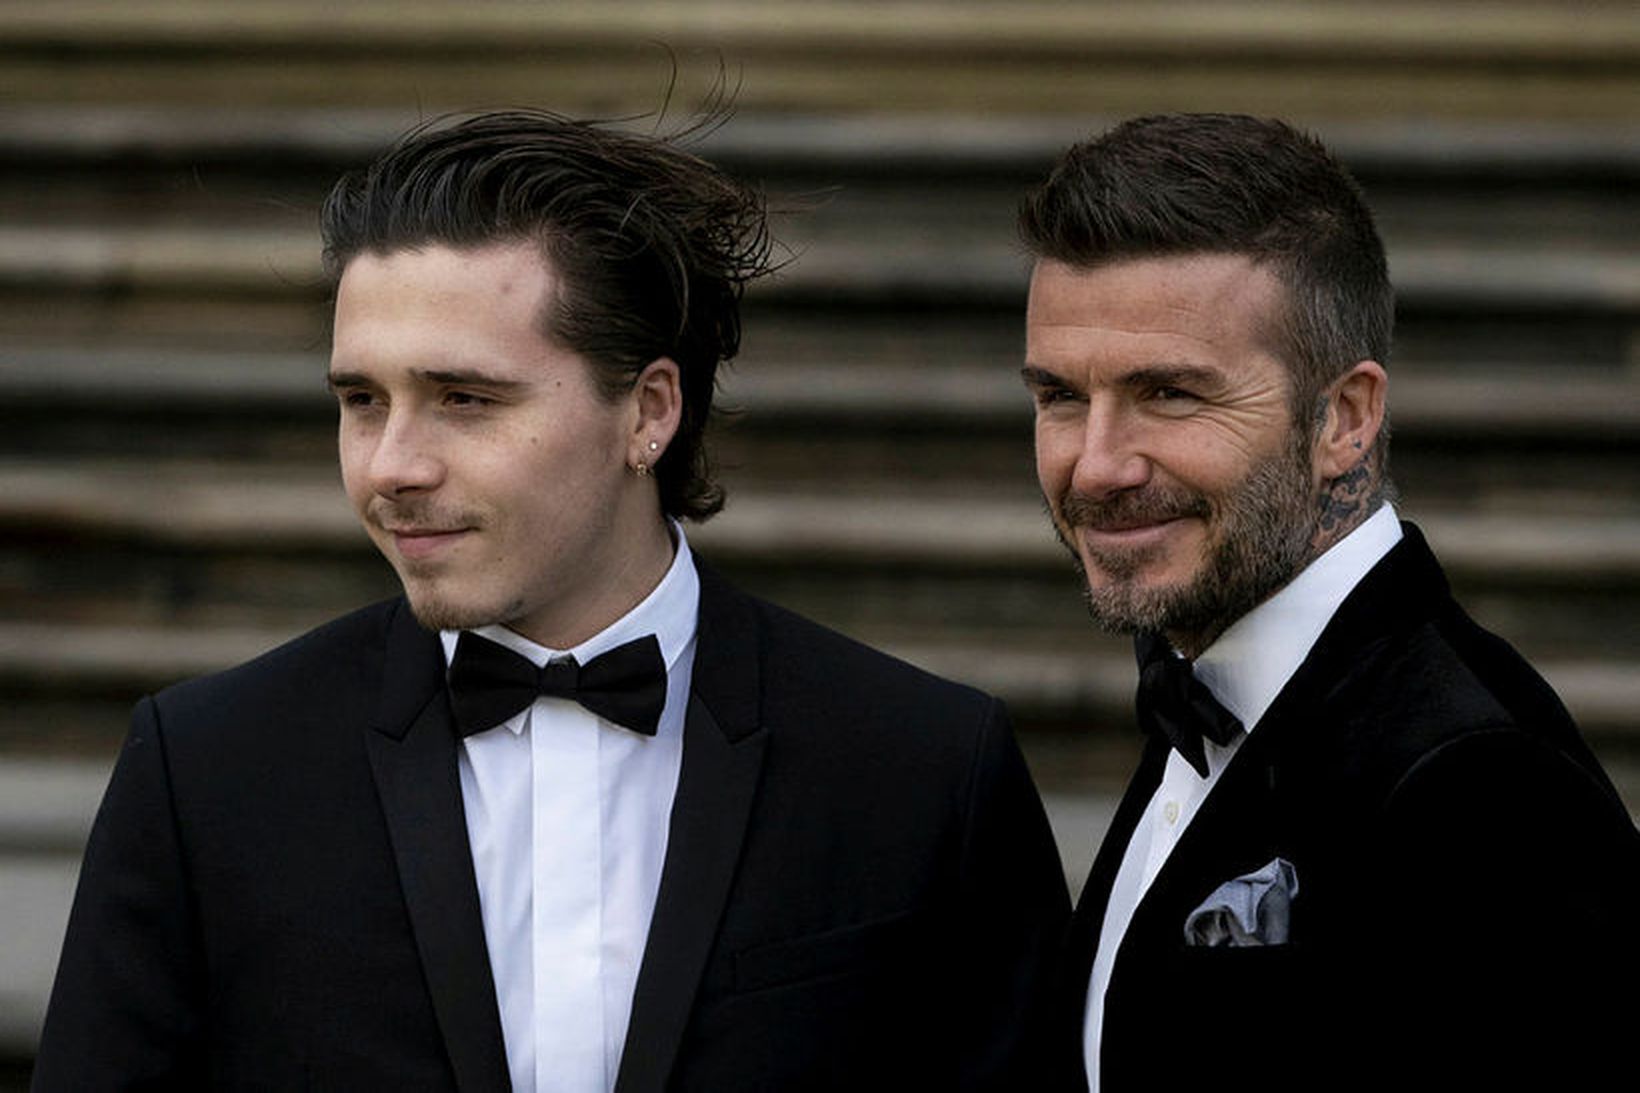 Brooklyn Beckham ásamt pabba sínum, David Beckham.